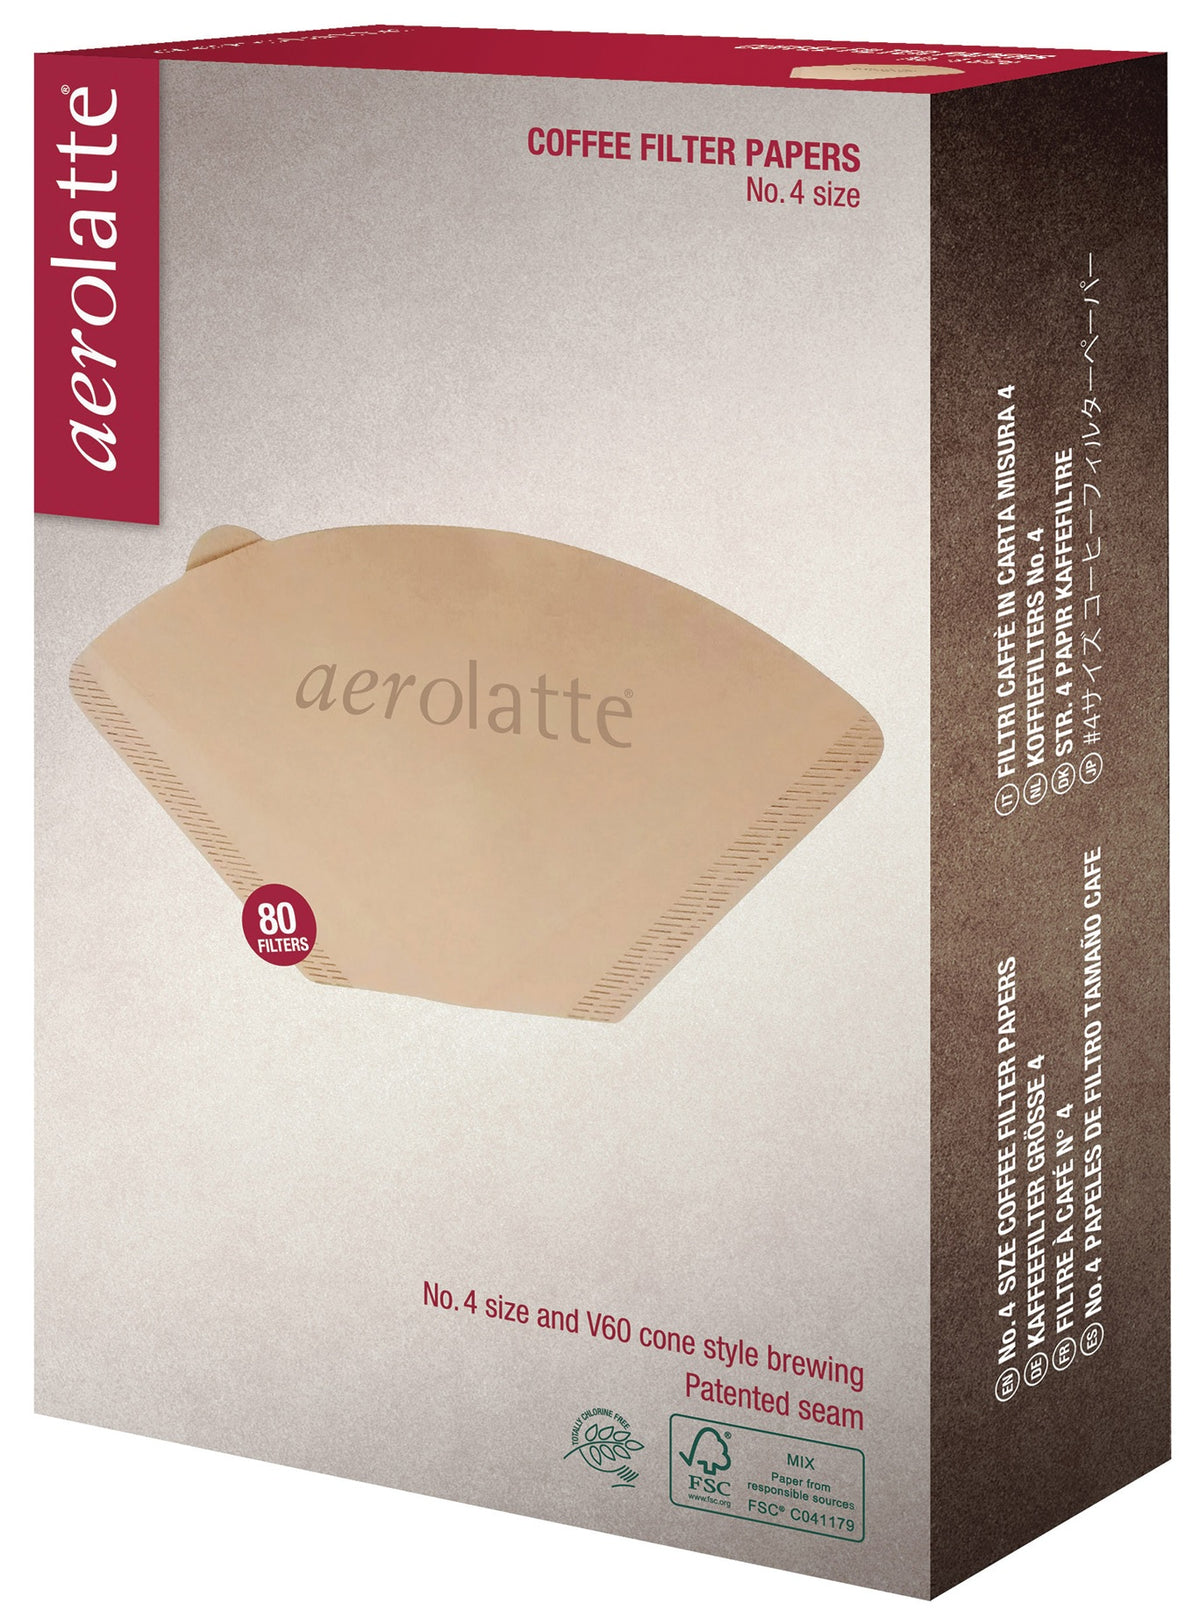 Aerolatte 0087 Unbleached Coffee Filters, #4